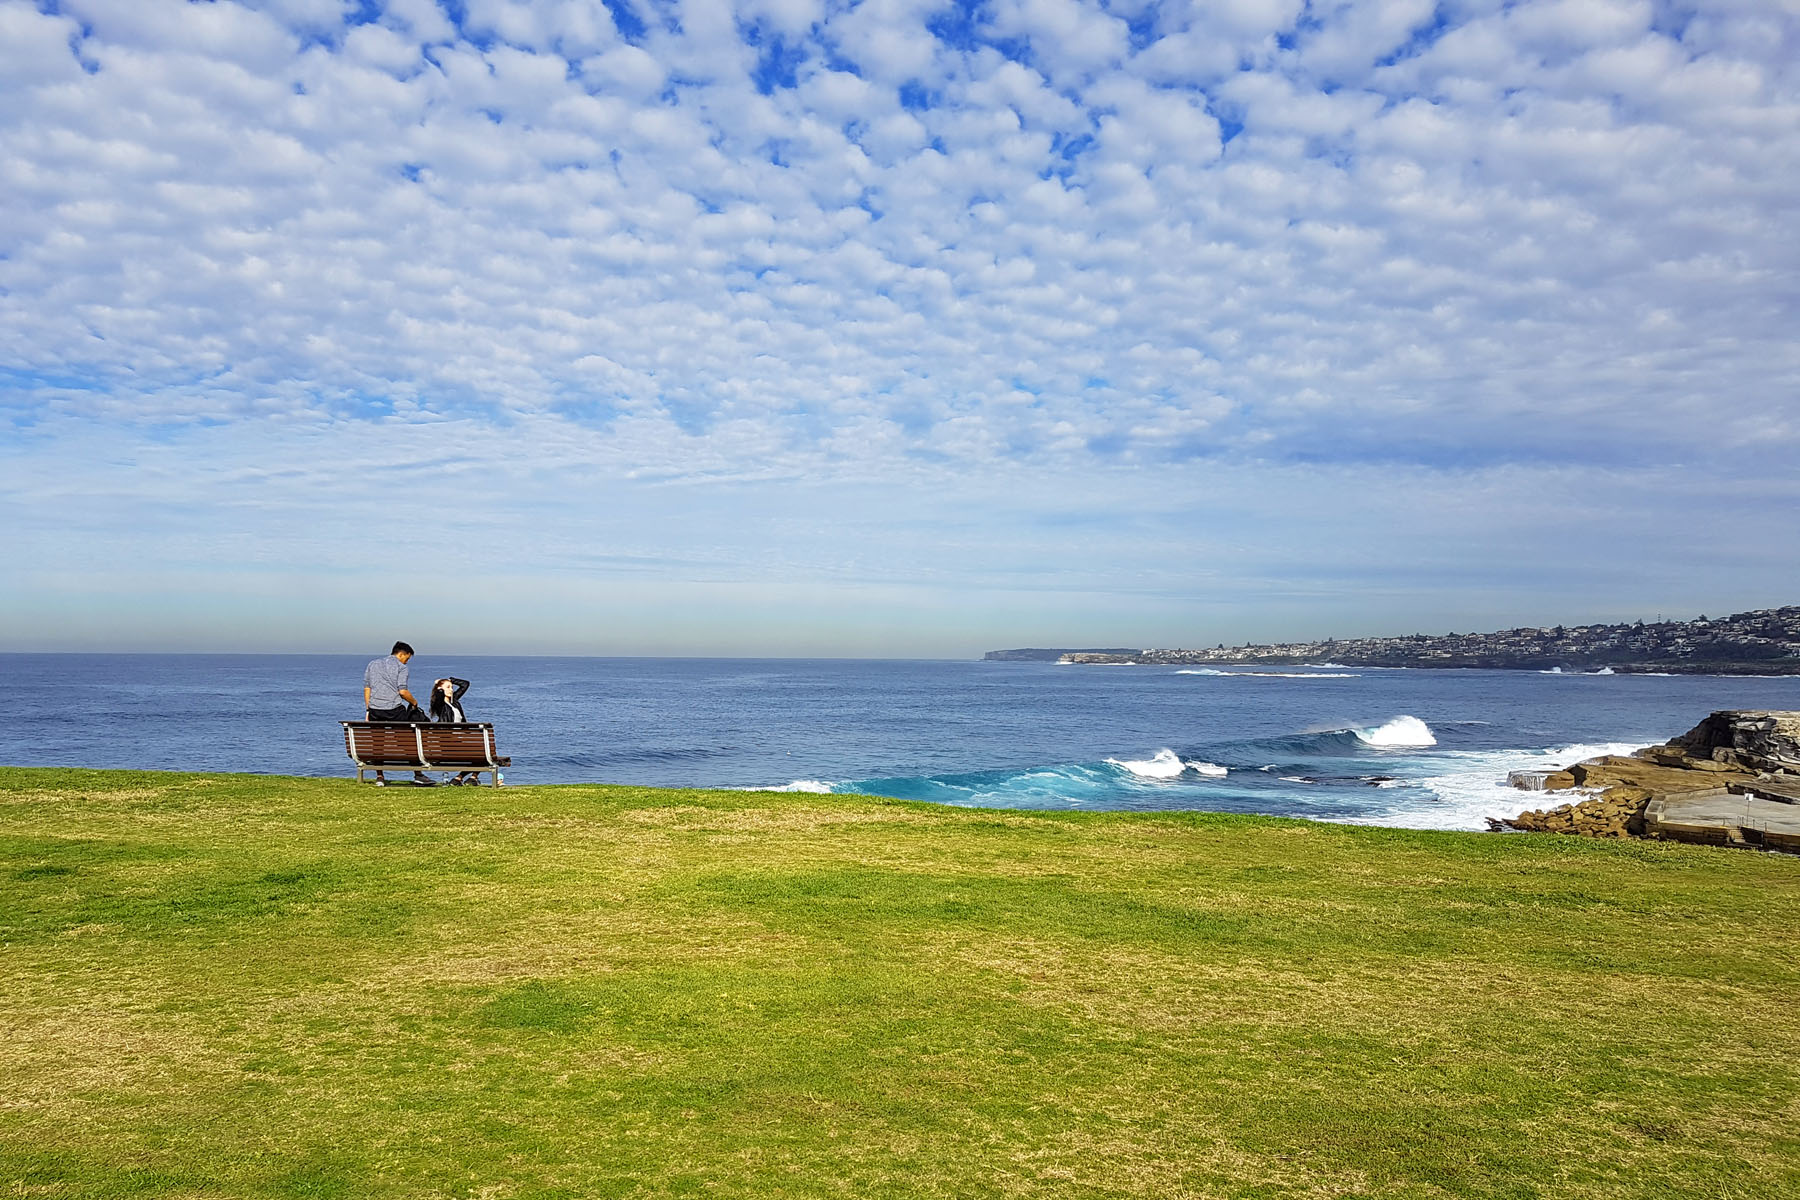 SGMT Australia Sydney_Bondi to Coogee Coastal Walk_17 Clifftop Bench Couple Goals